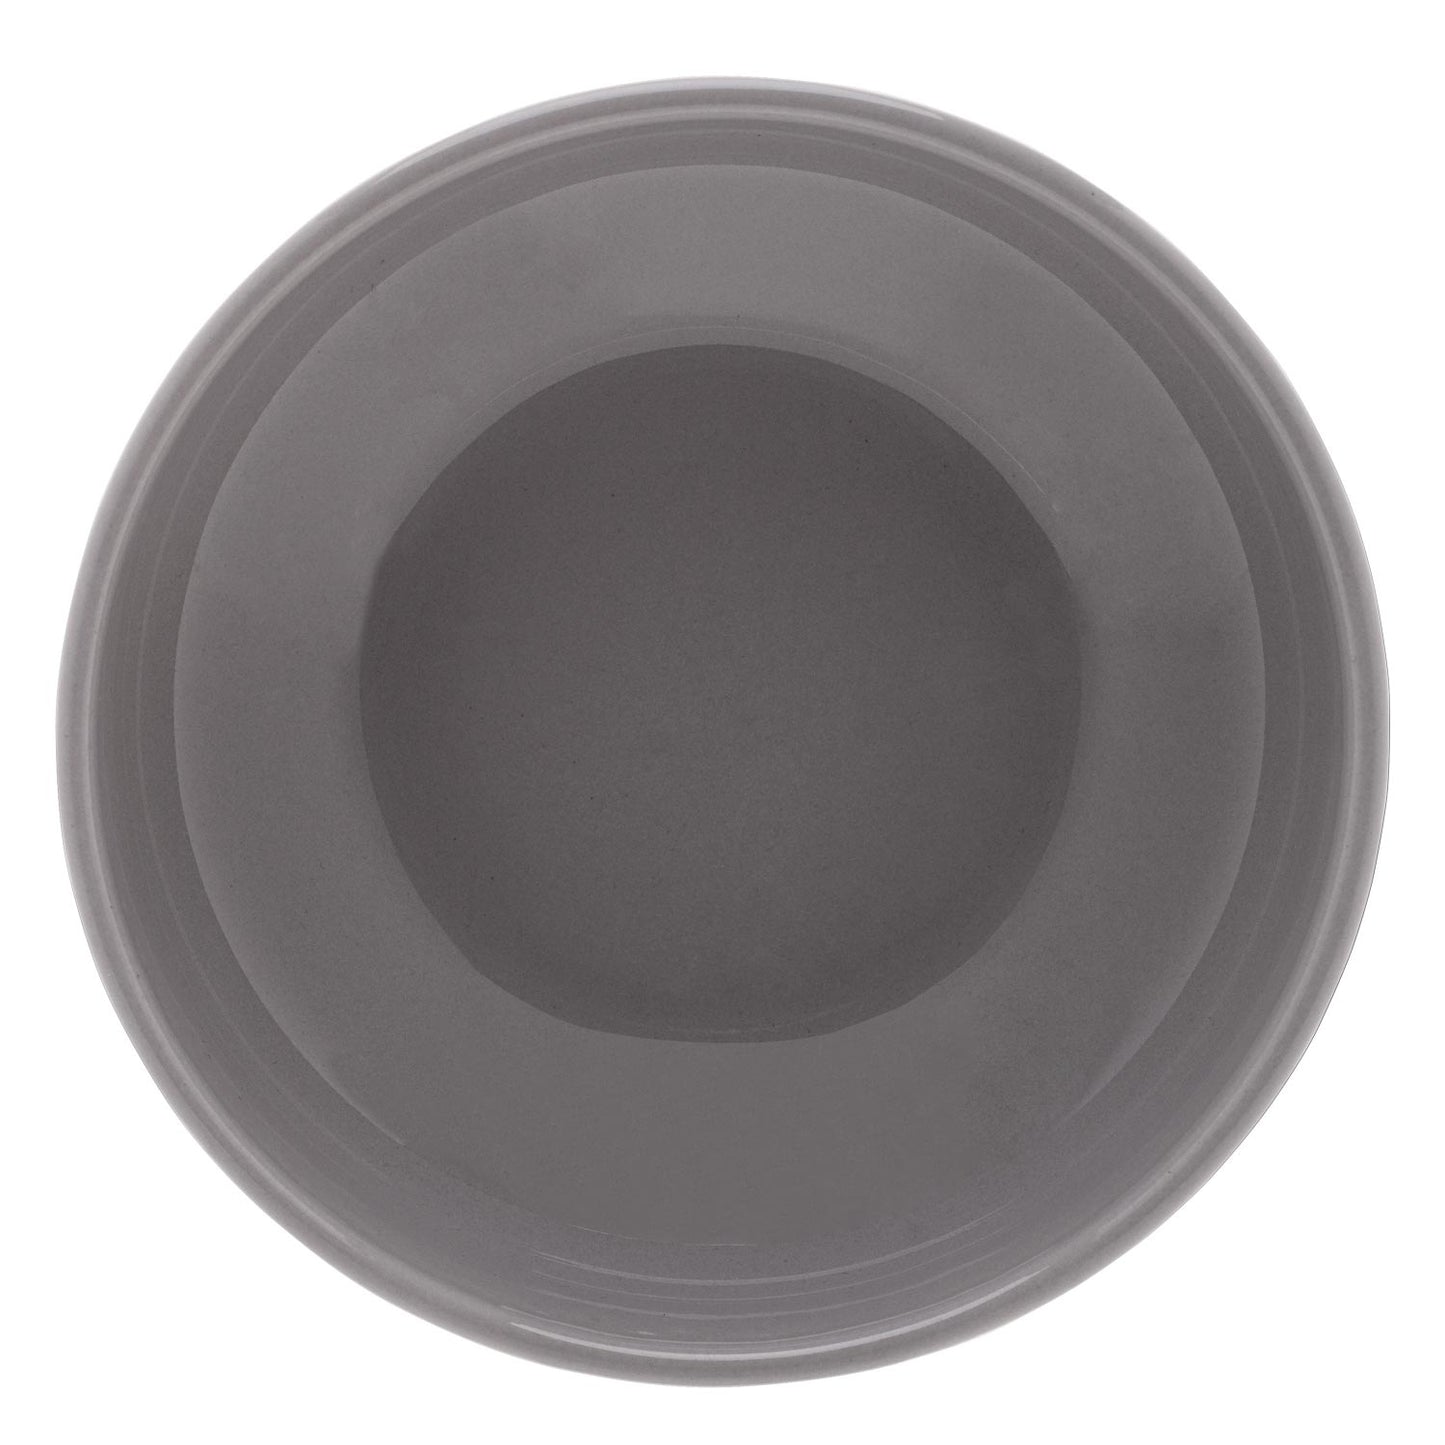 Bowl em Cerâmica Arme Cinza 16 cm